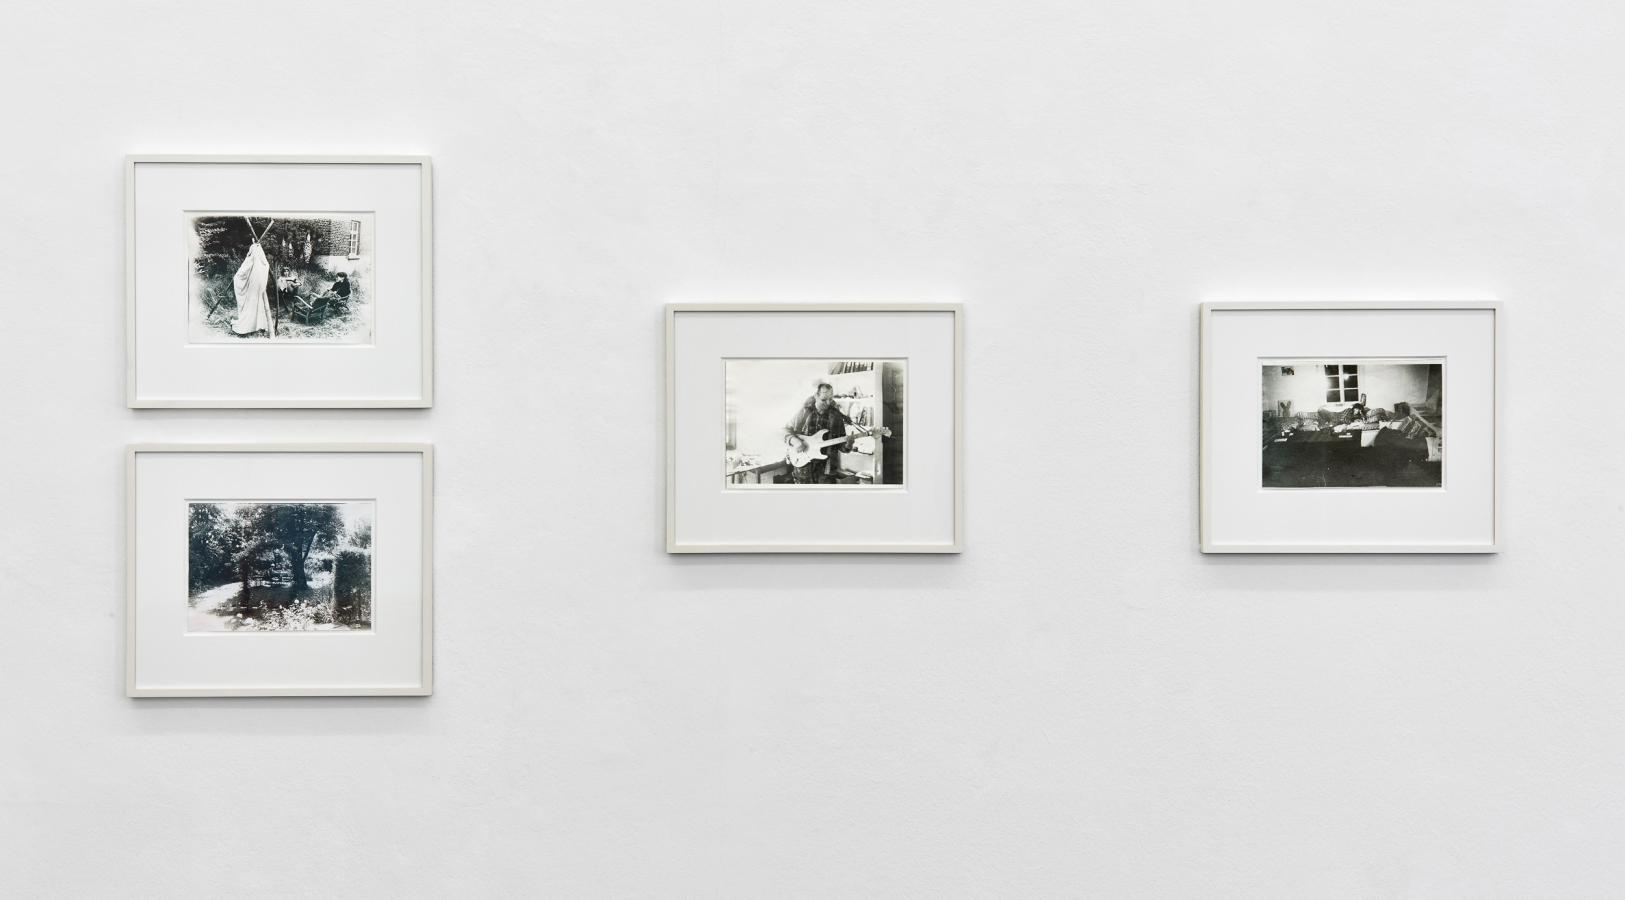 sigmar-polke-fotografien-1973-78-installation-04-michael-werner-kunsthandel.jpg